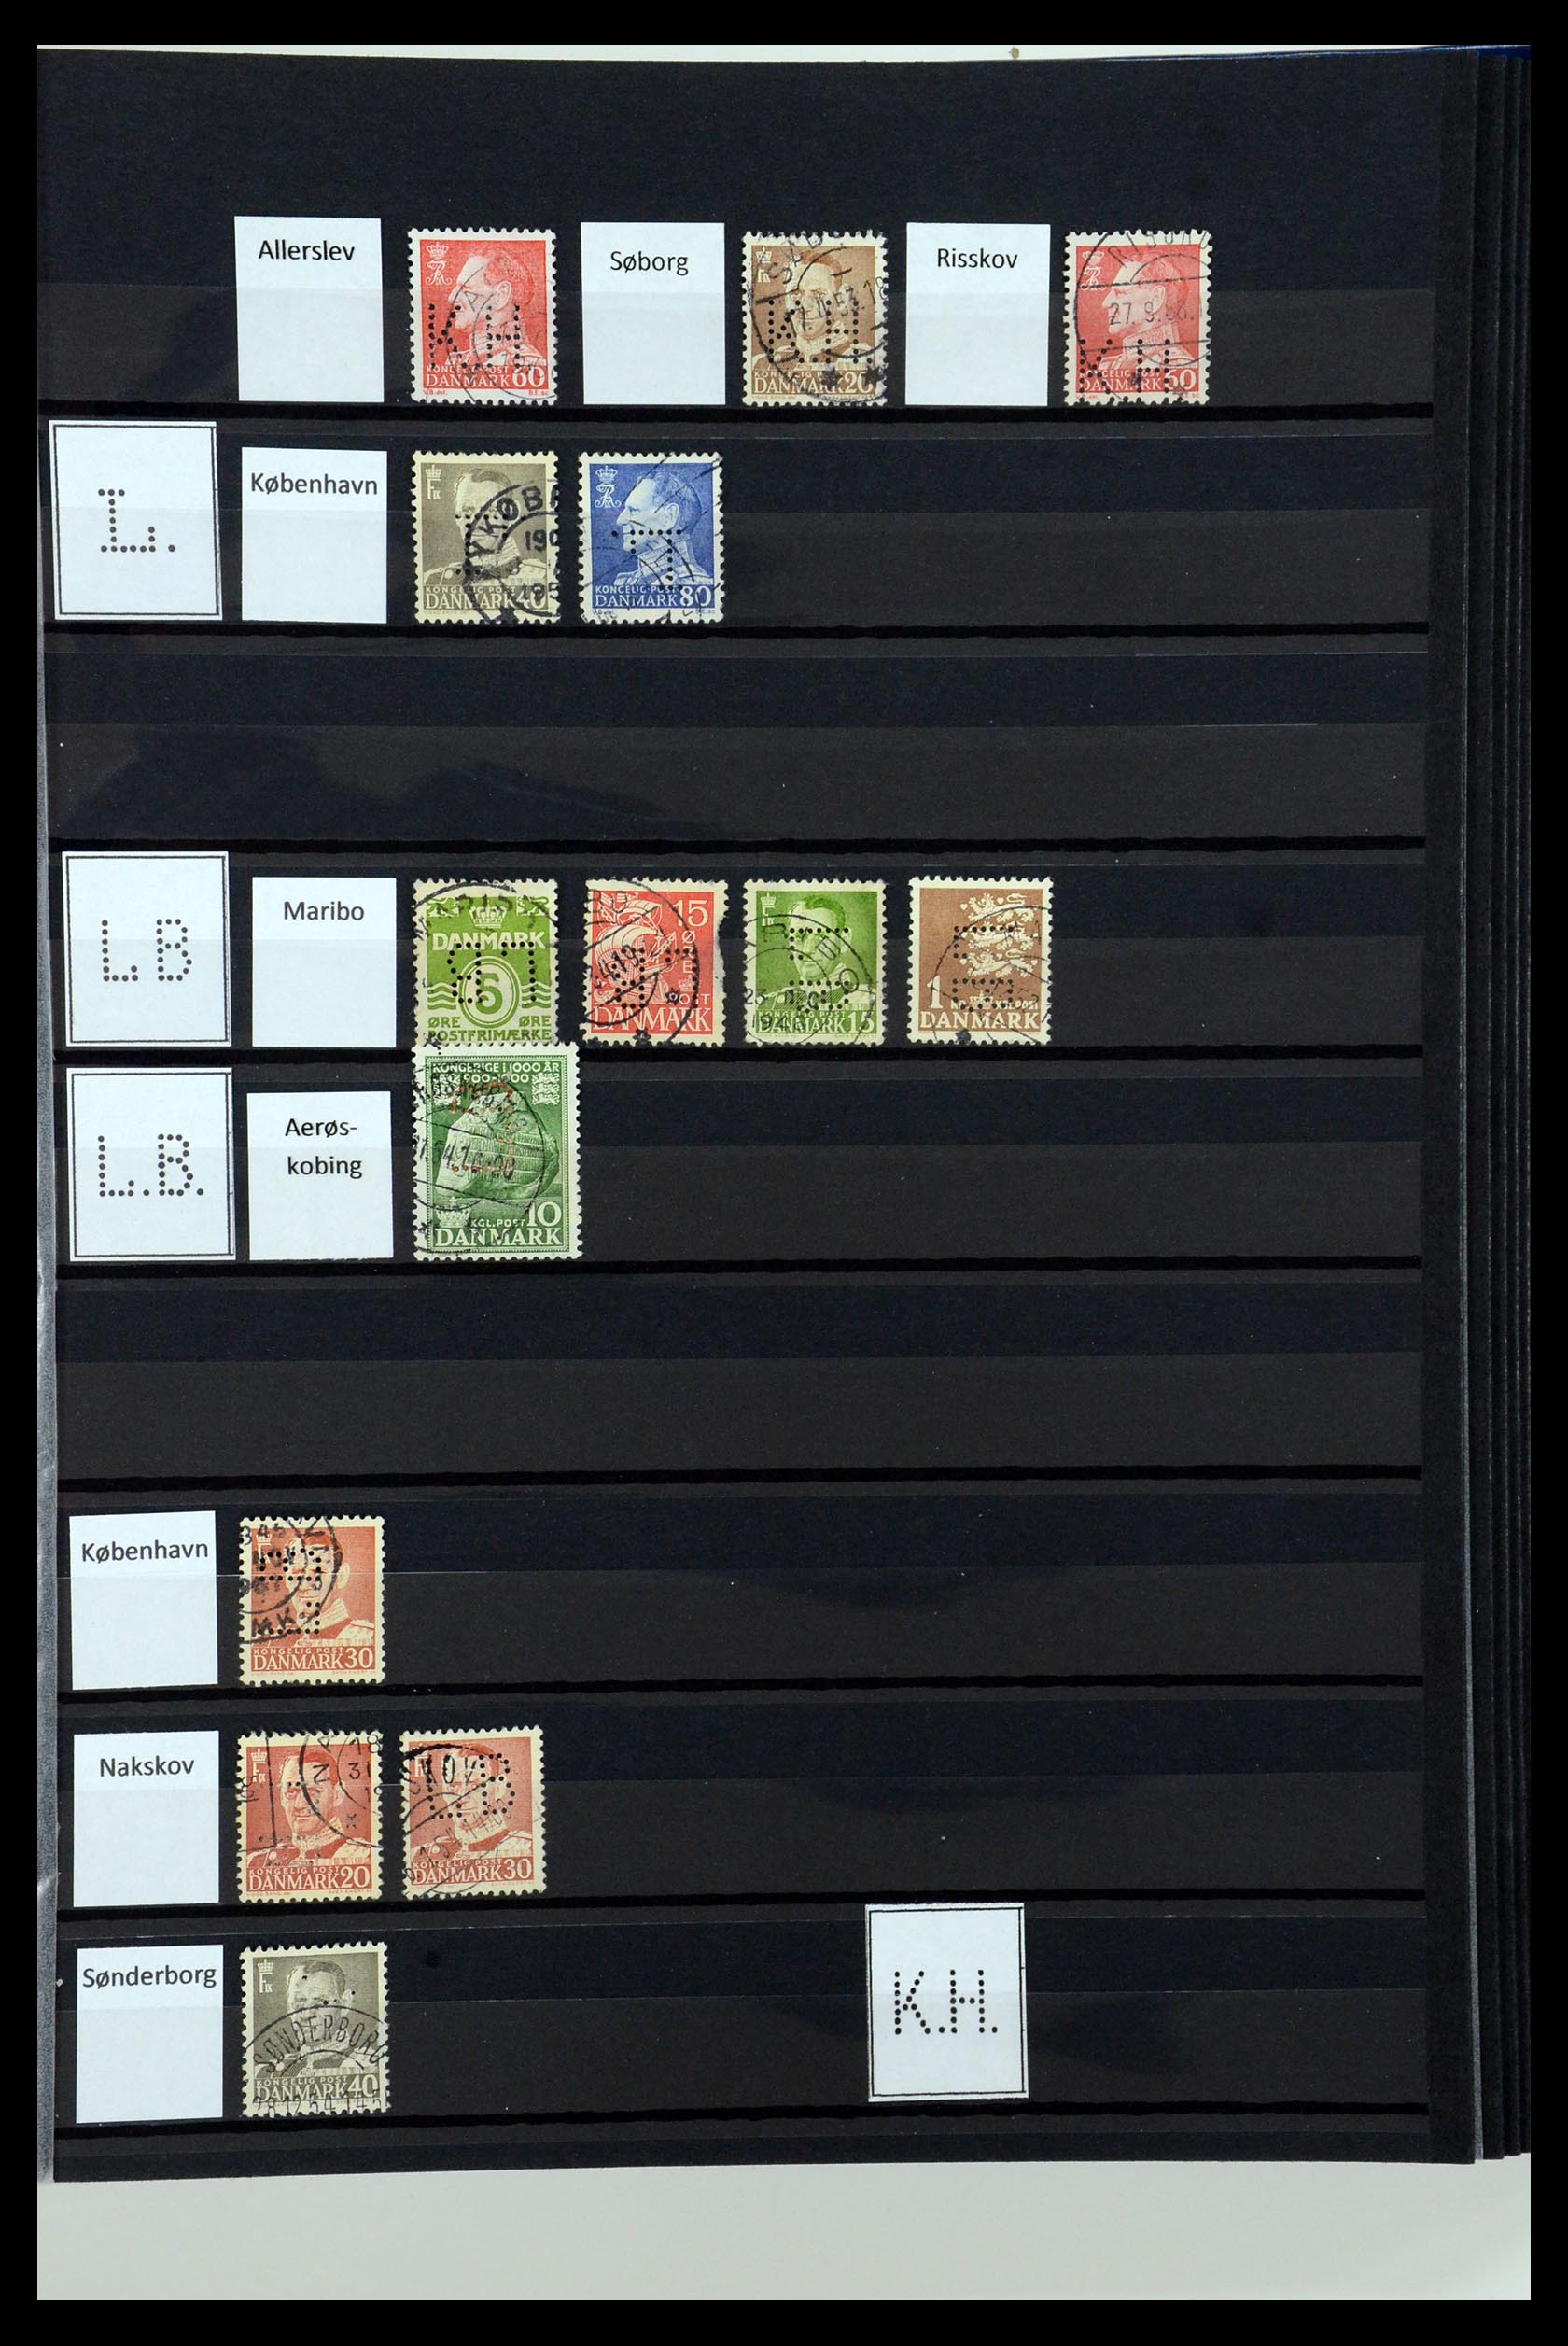 36396 086 - Stamp collection 36396 Denmark perfins.